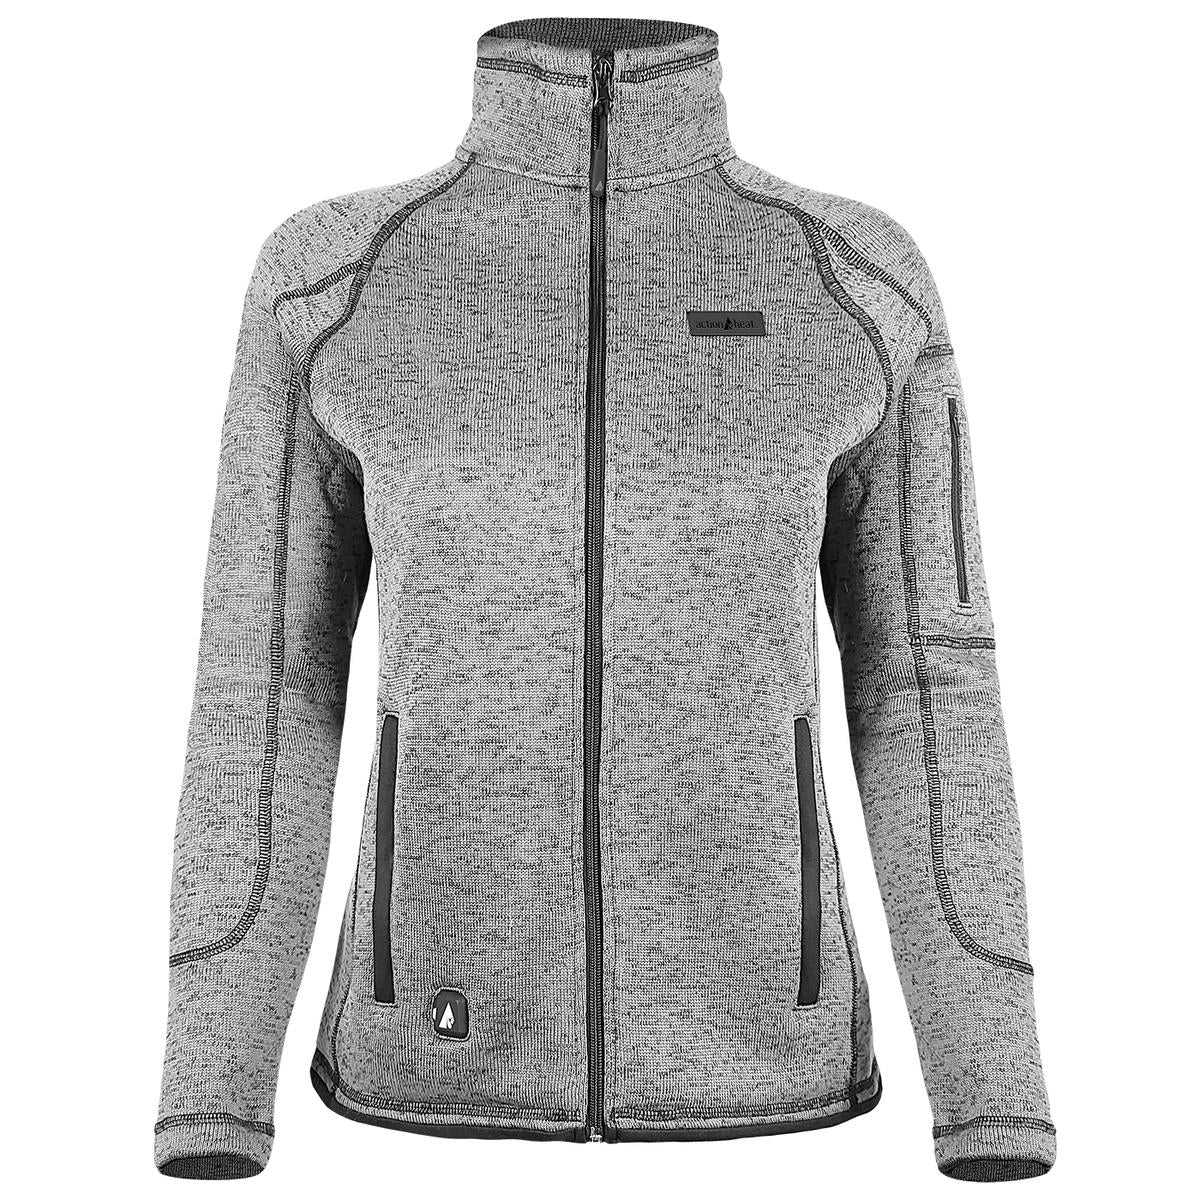 ActionHeat 5V Women's Battery Heated Sweater Jacket - Heated